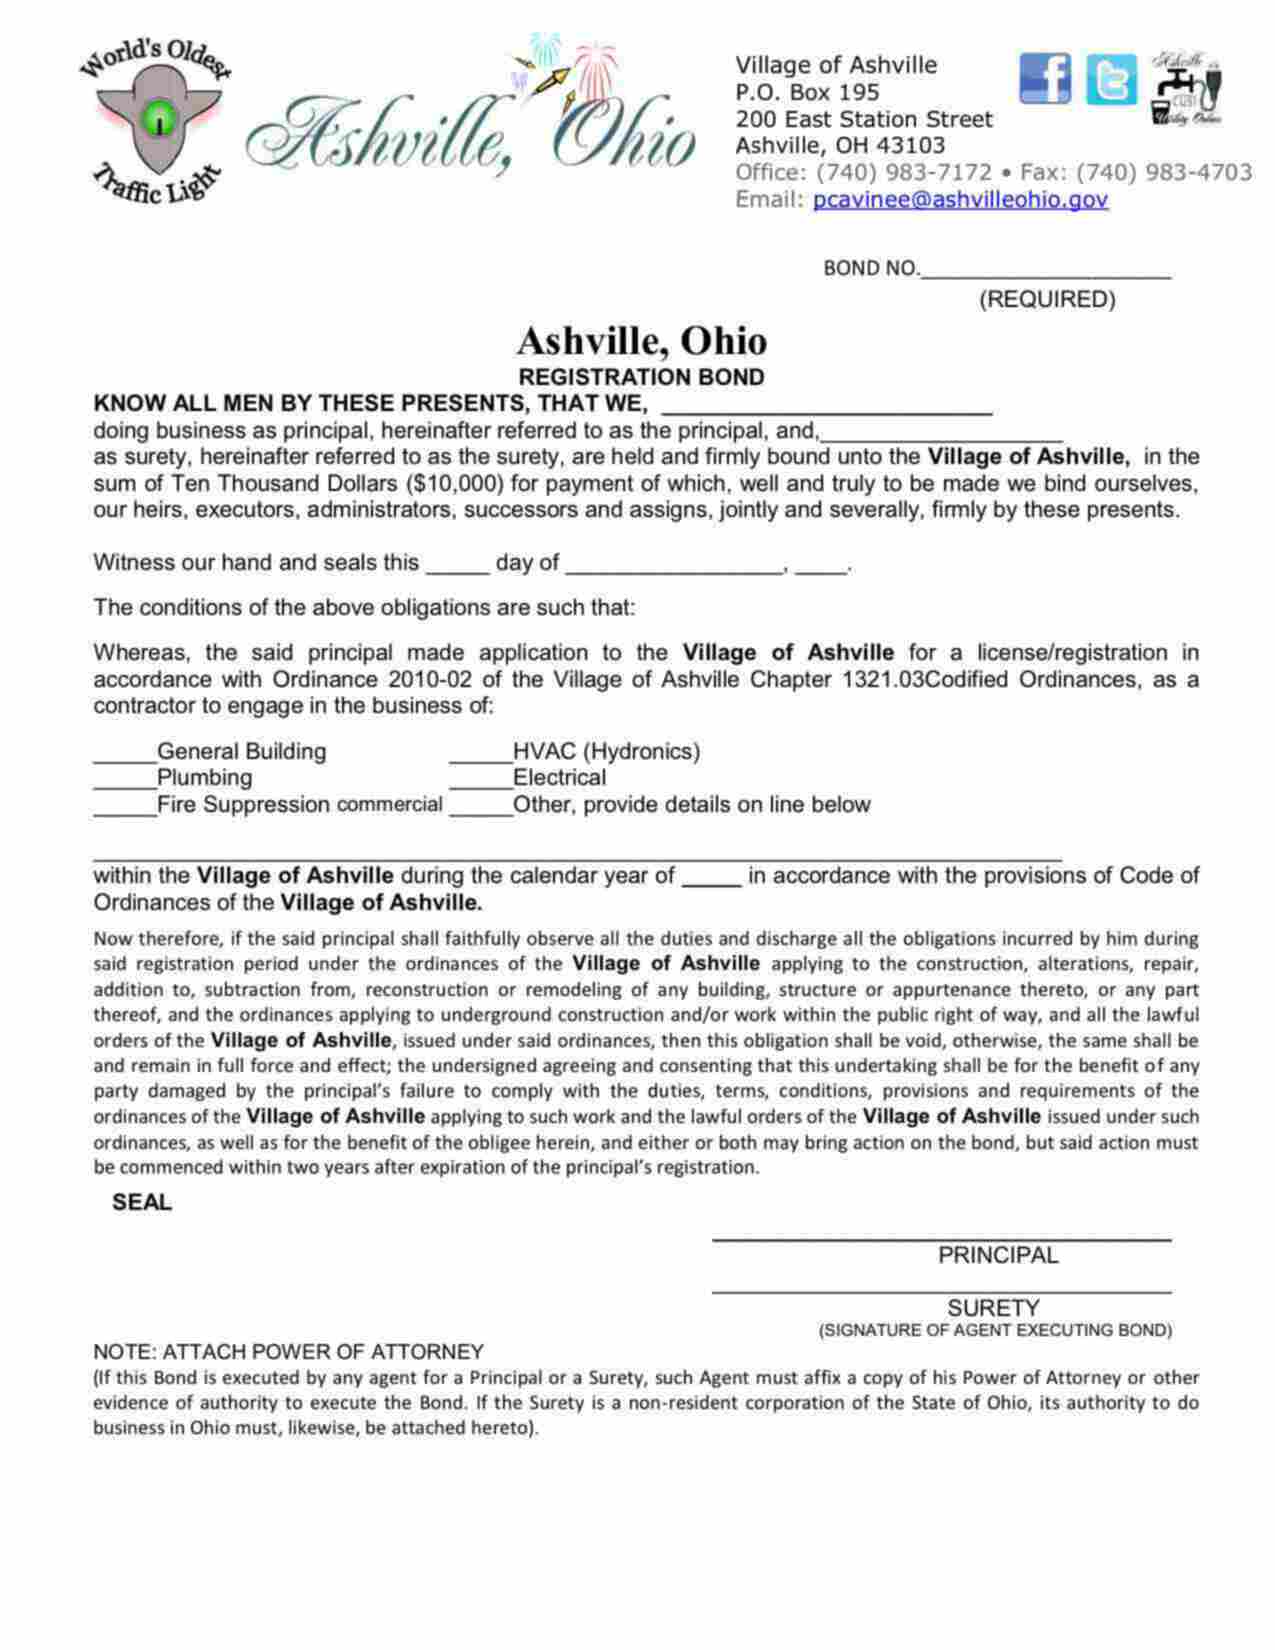 Ohio Registration - General Building Bond Form